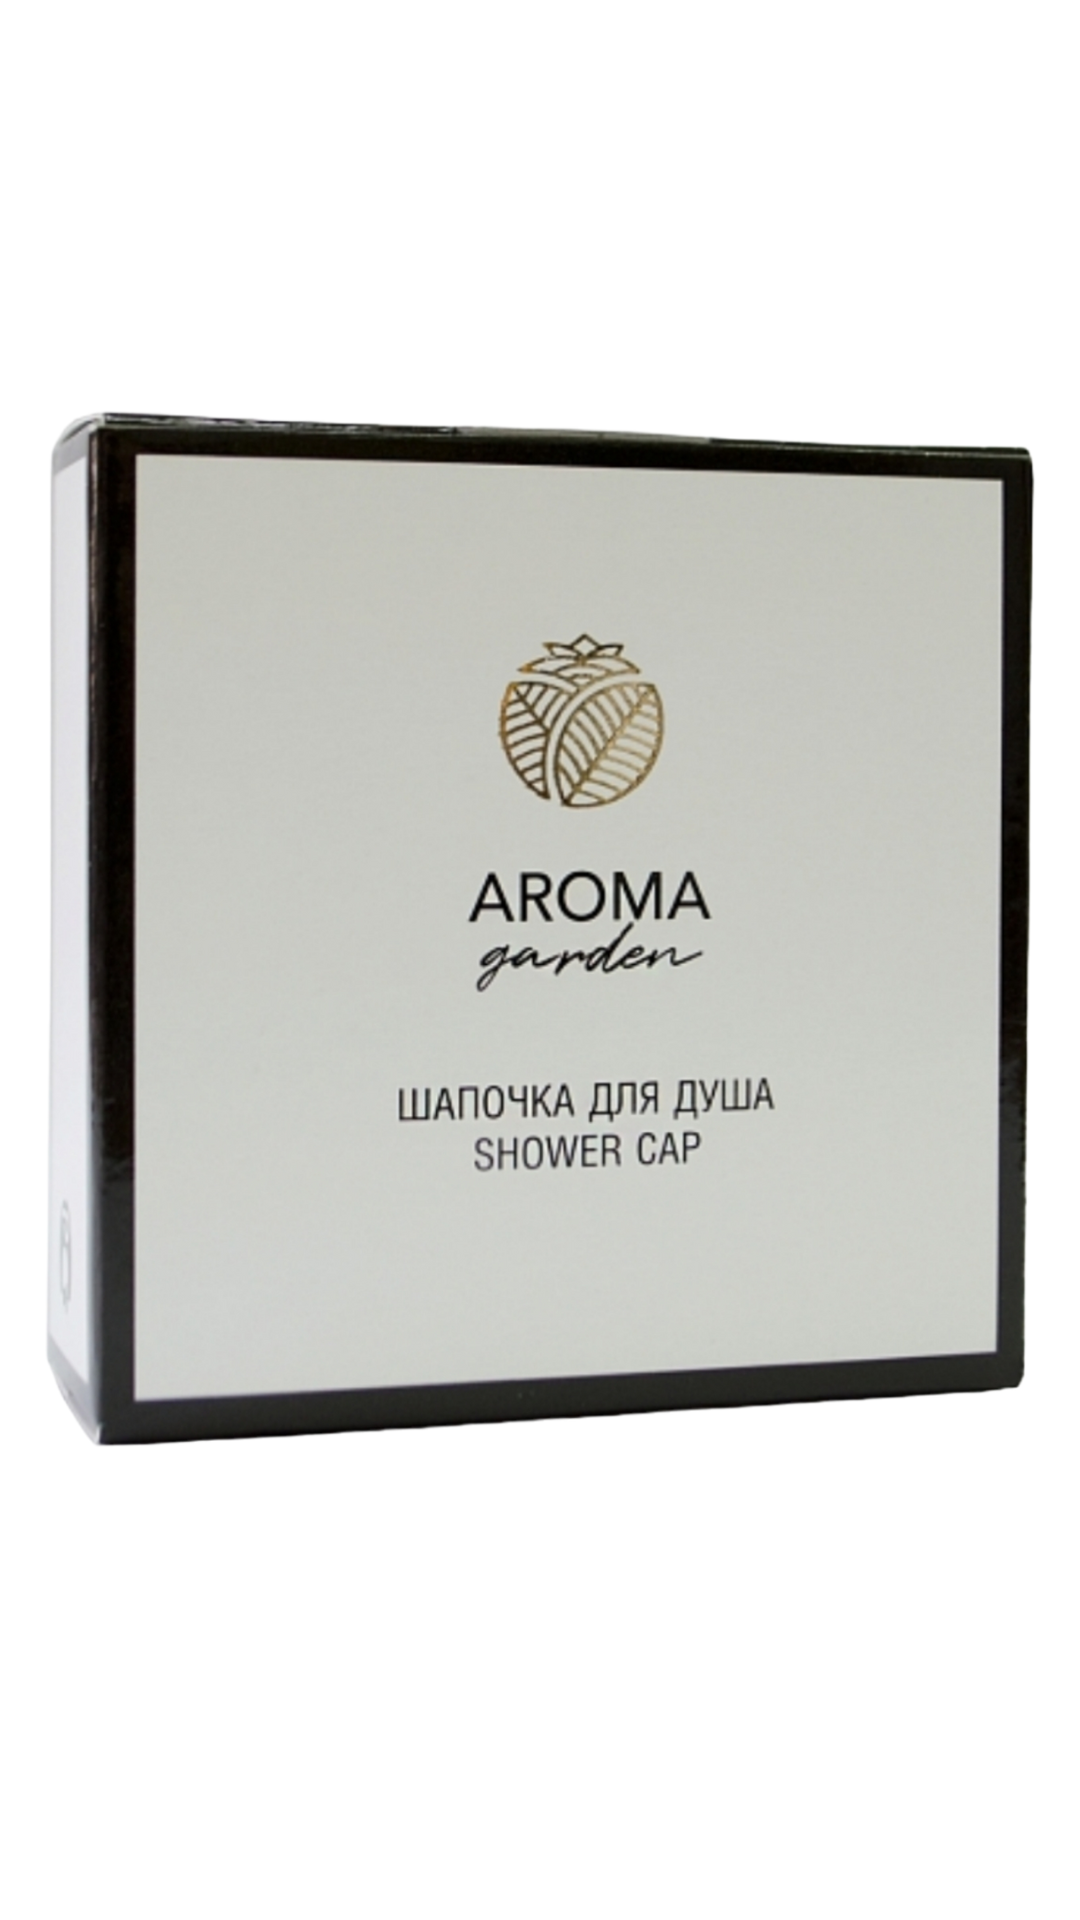 Шапочки для душа Aroma Garden картон 250 шт. шапочки для душа aroma garden картон 250 шт